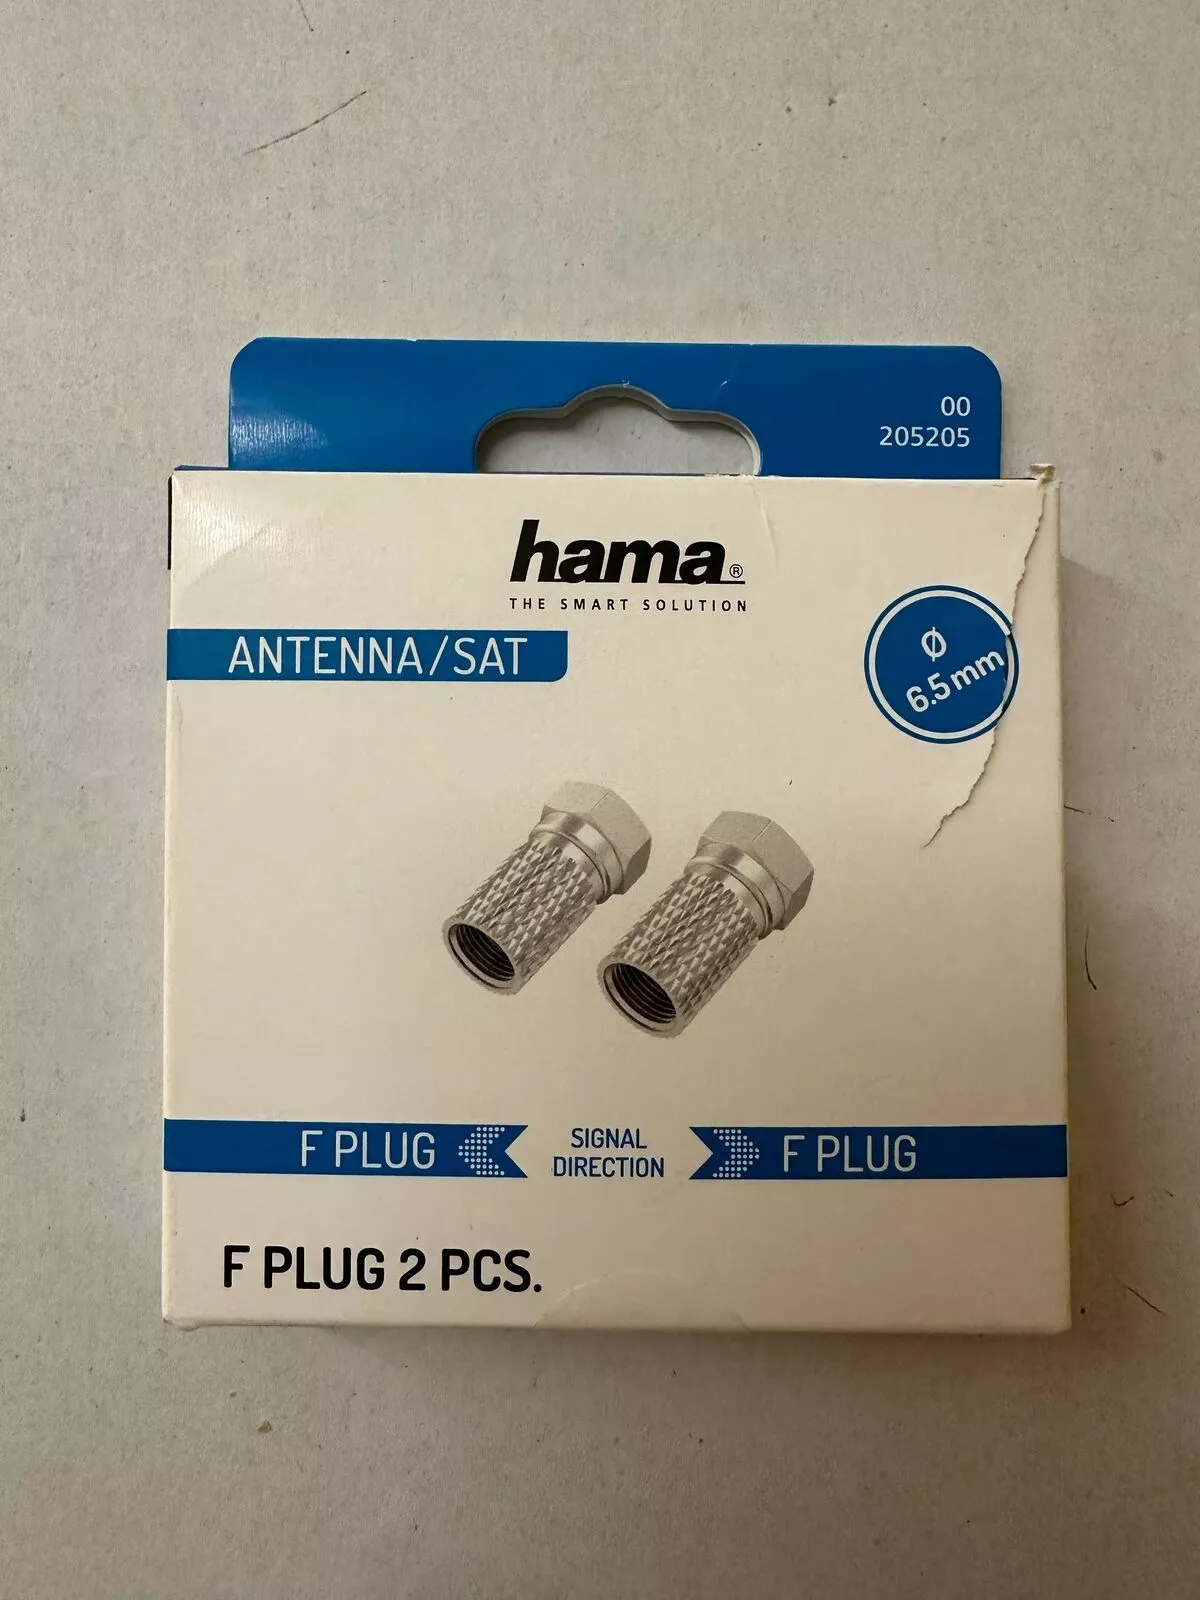 Hama F-STECKER 2 STCK., 6,5MM 205205